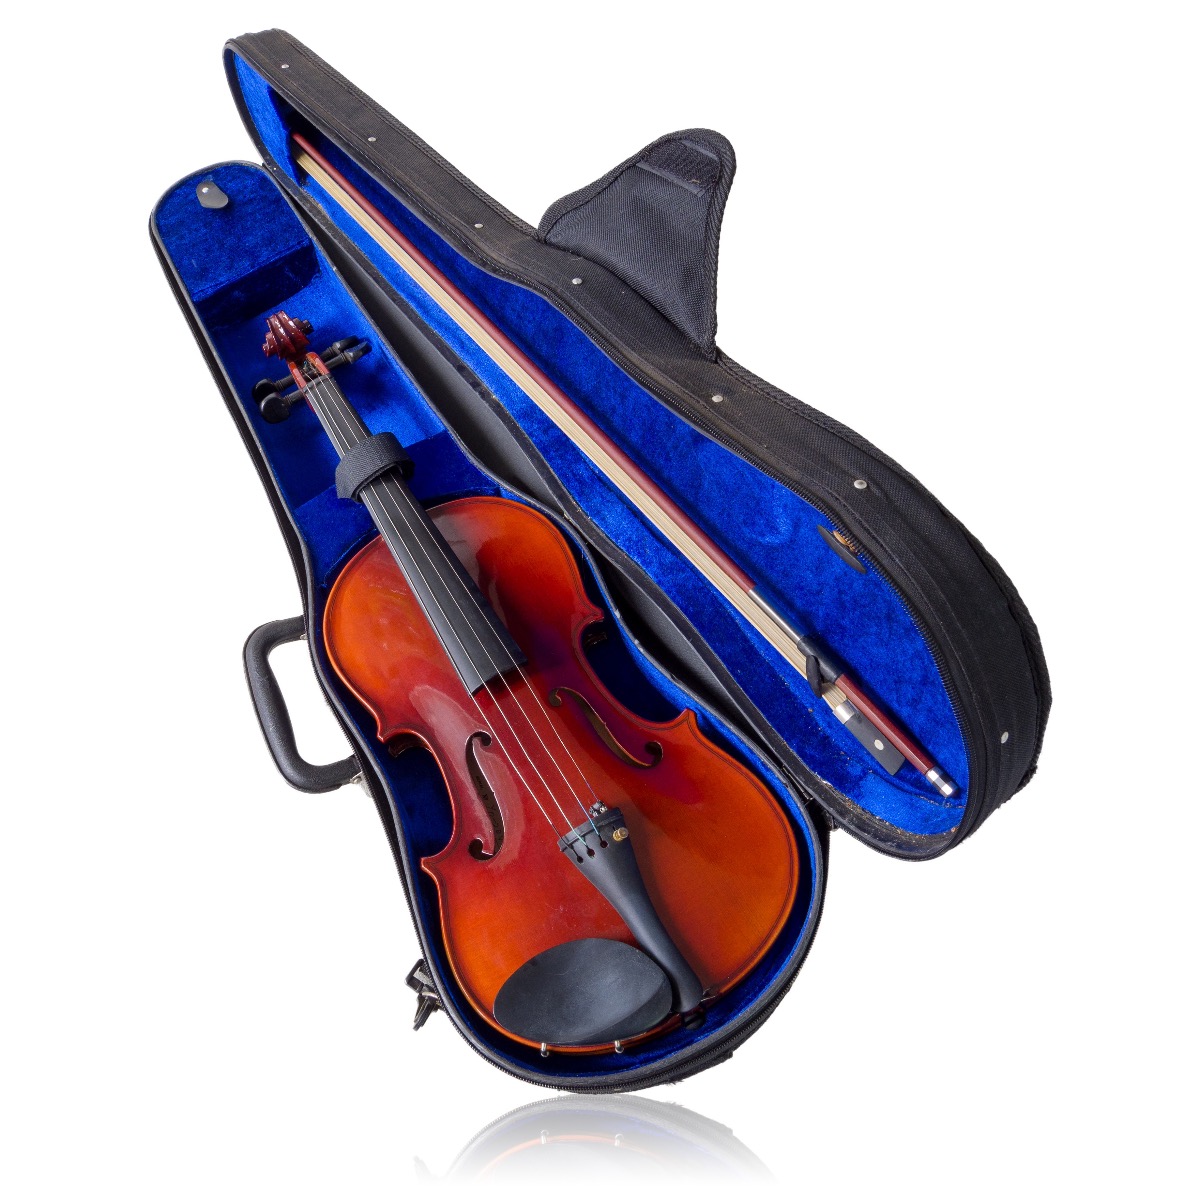 Cheap violin in cheap case, missing its bridge